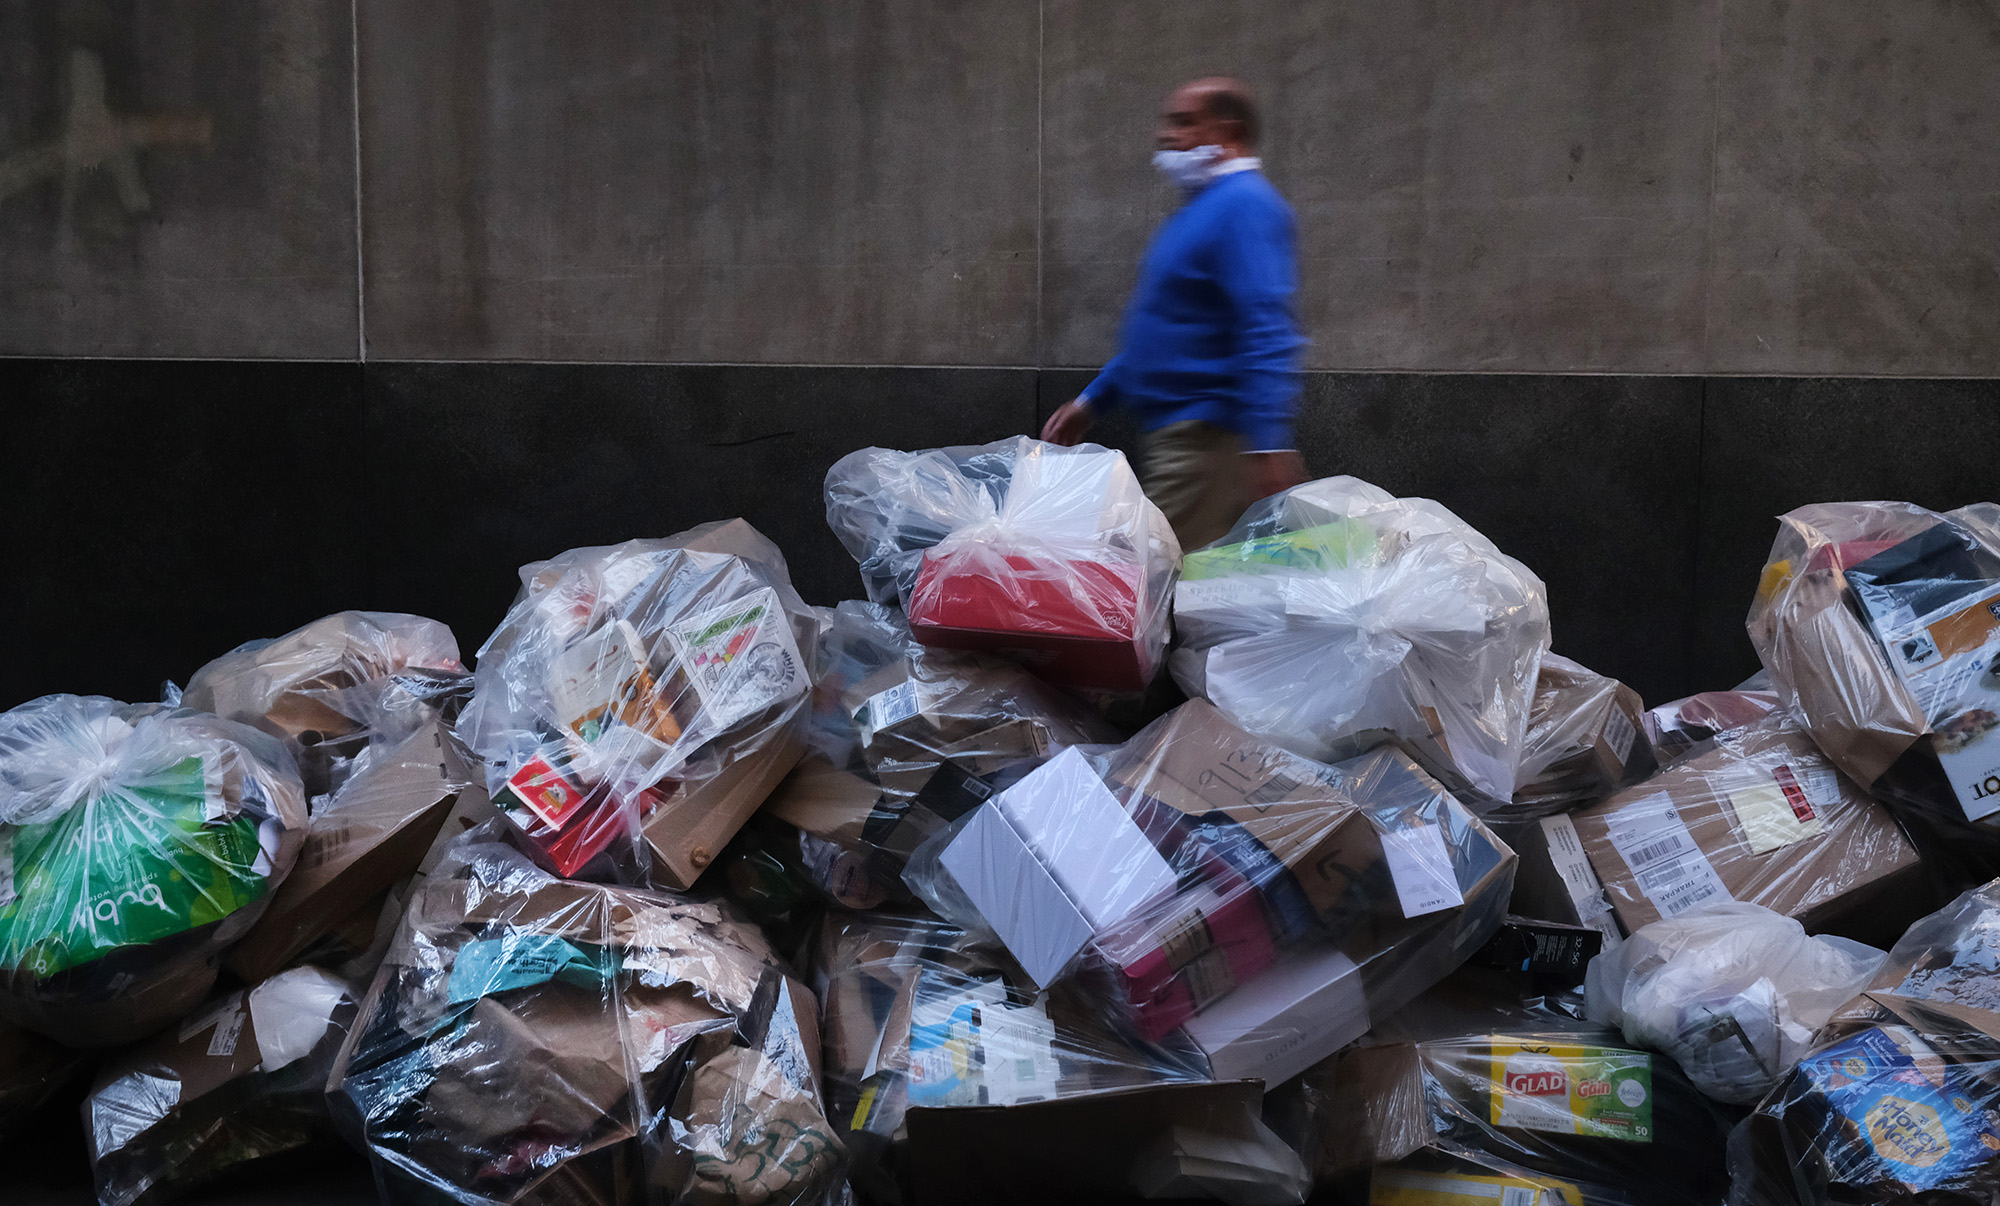 Mayor: Watch for, avoid fake garbage bags, News